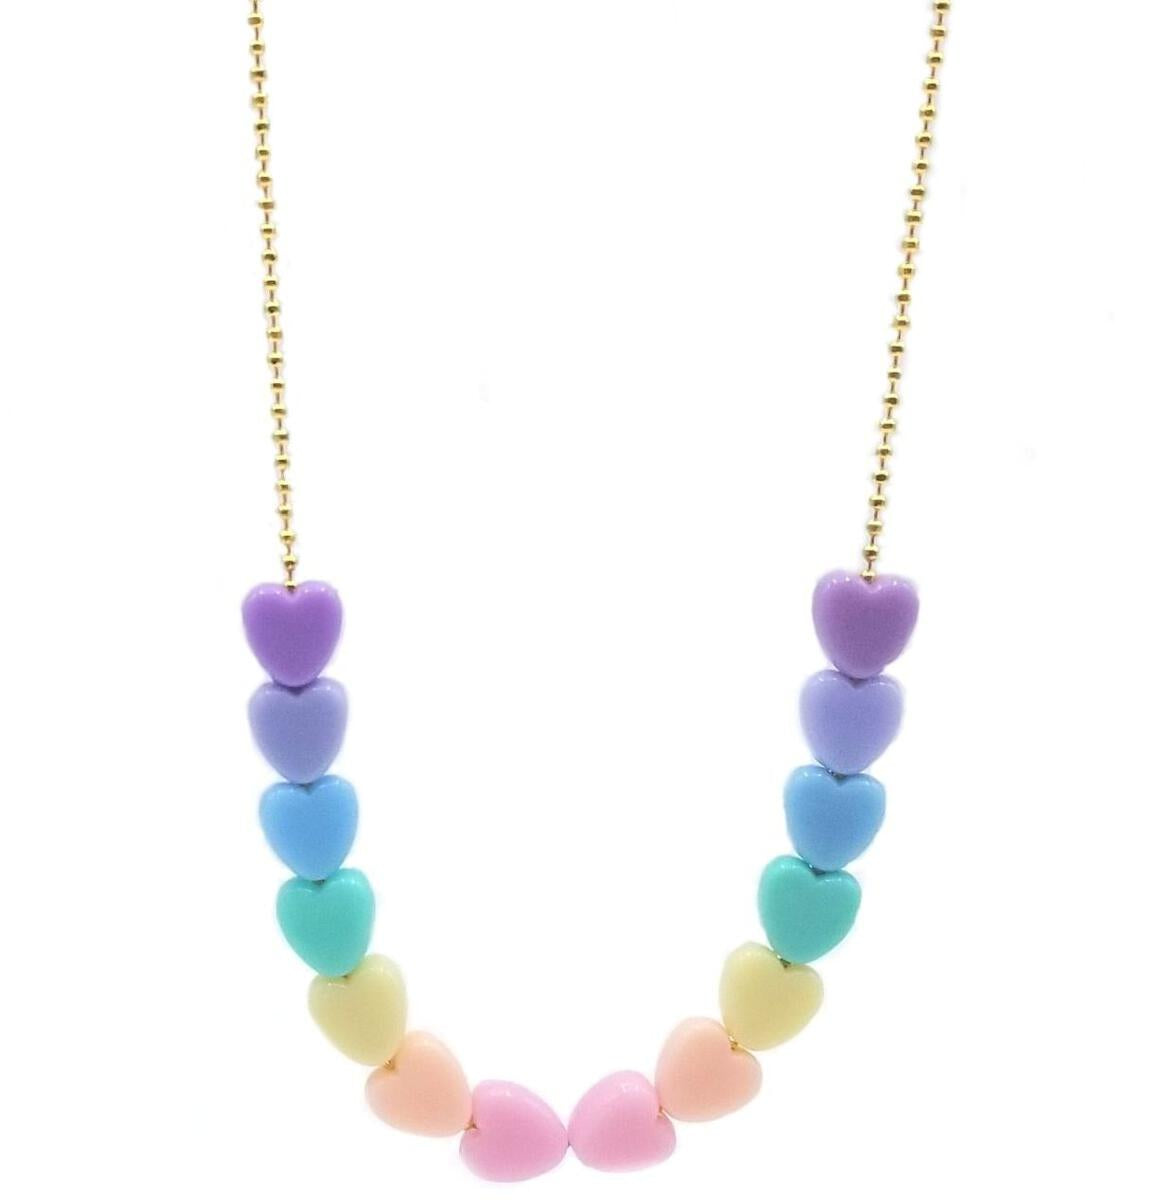 Bottleblond pastel heart necklace